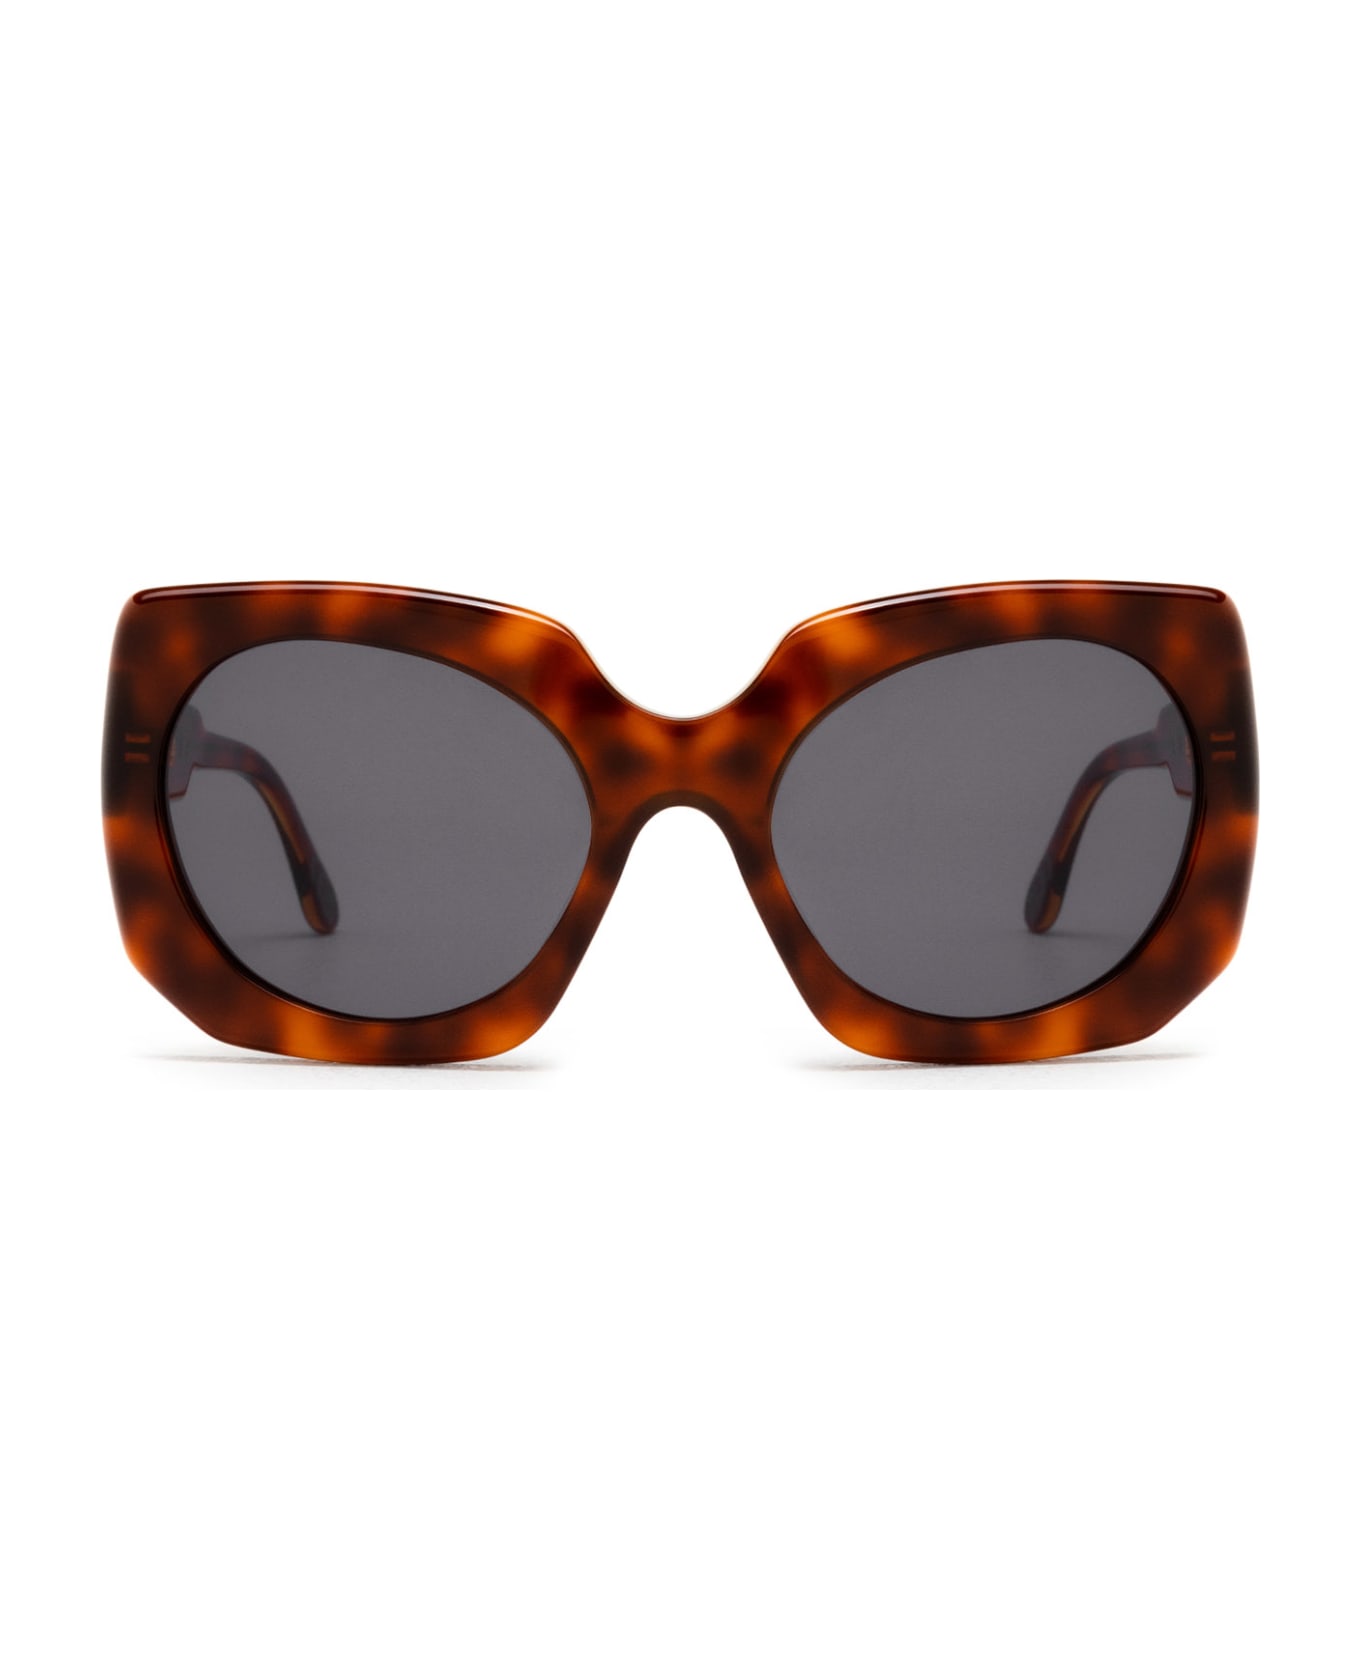 Marni Eyewear Jellyfish Lake Blonde Havana Casual Sunglasses - Blonde Havana